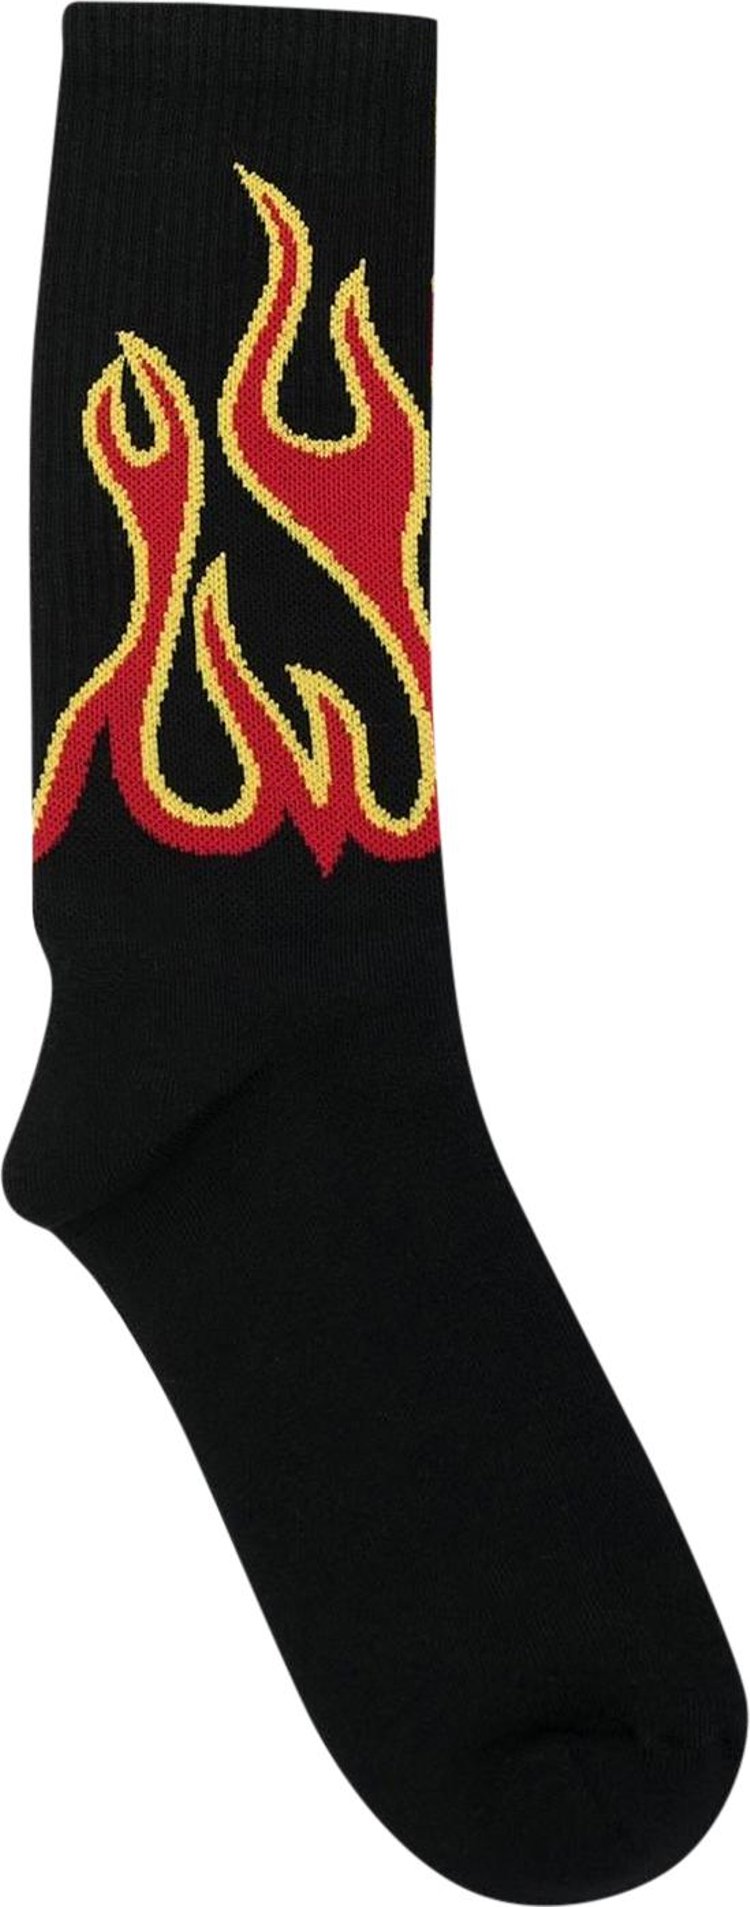 Palm Angels Burning Socks 'Black/Red'